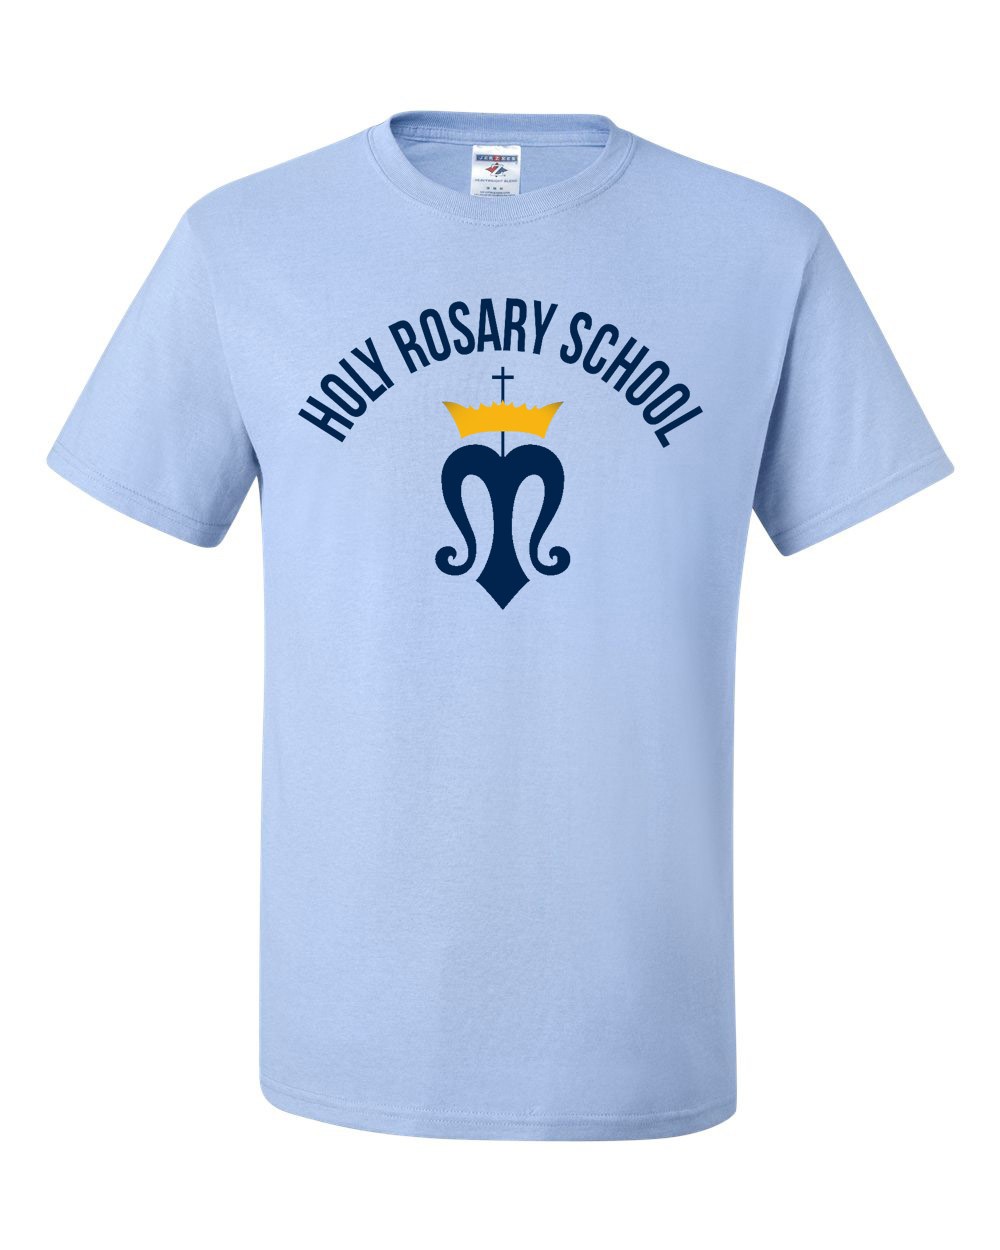 HRS Staff S/S Gym T-Shirt w/ School Logo #F1